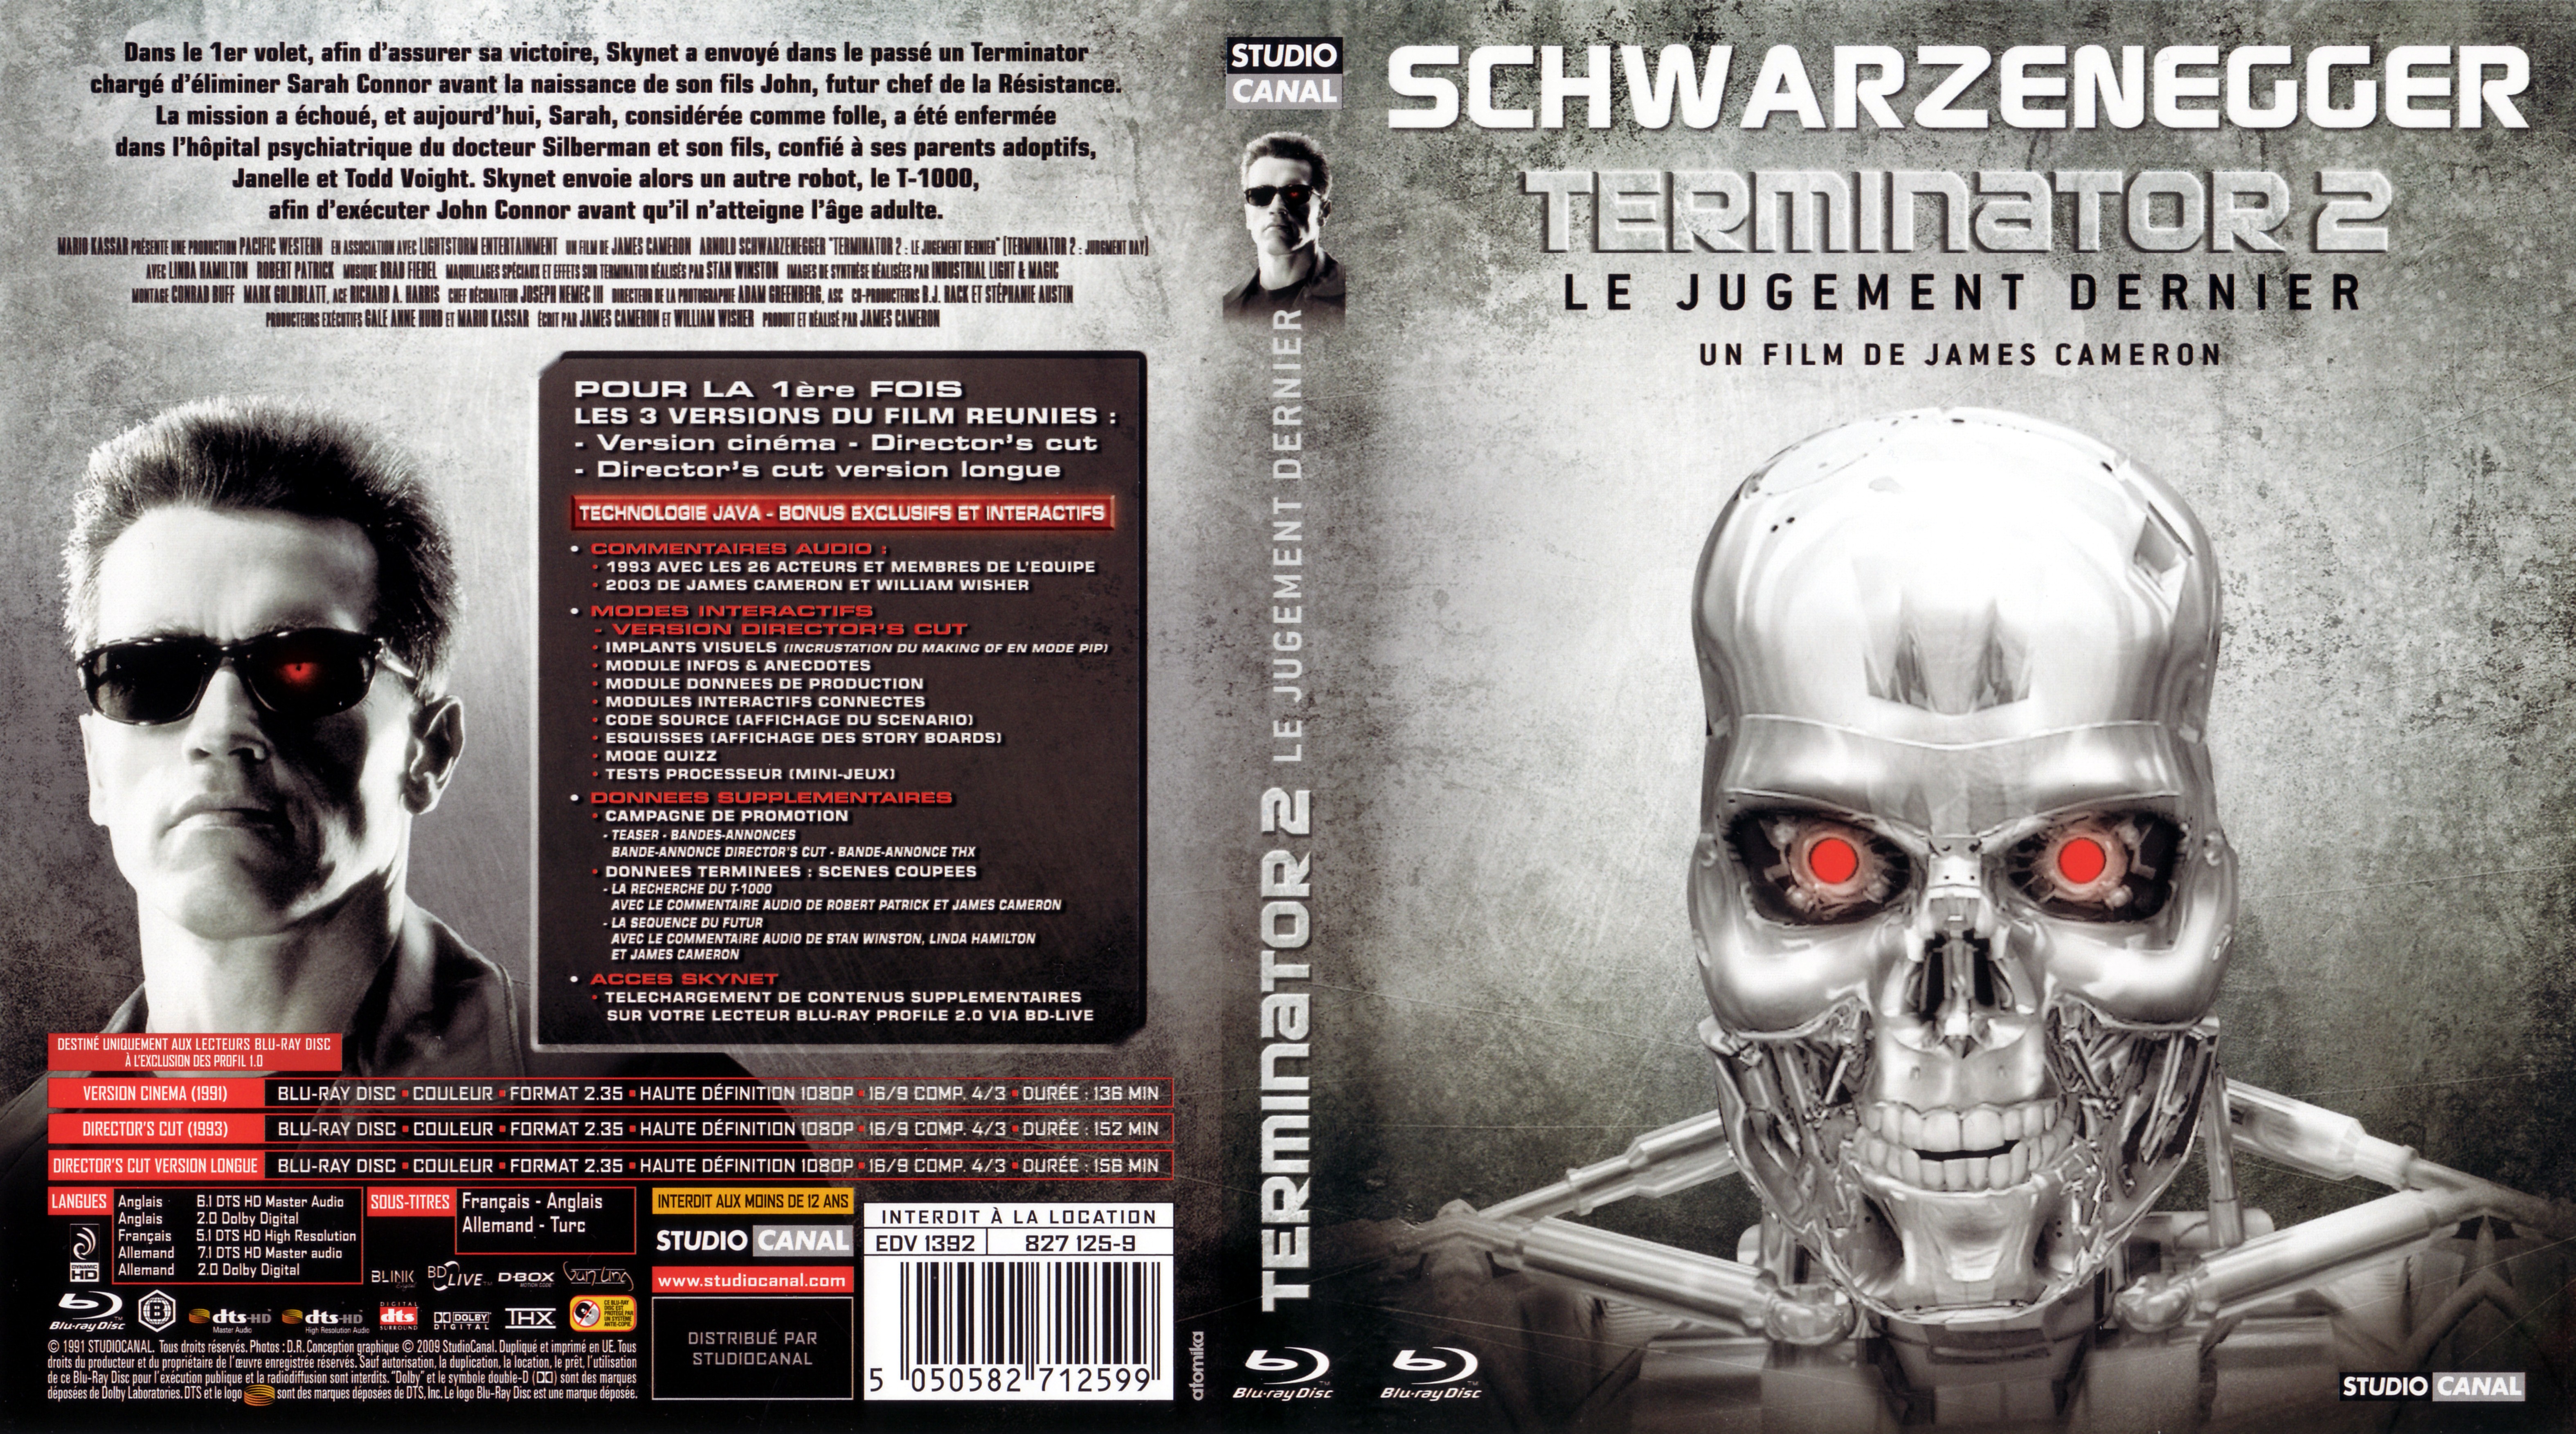 Jaquette DVD Terminator 2 (BLU-RAY) v2